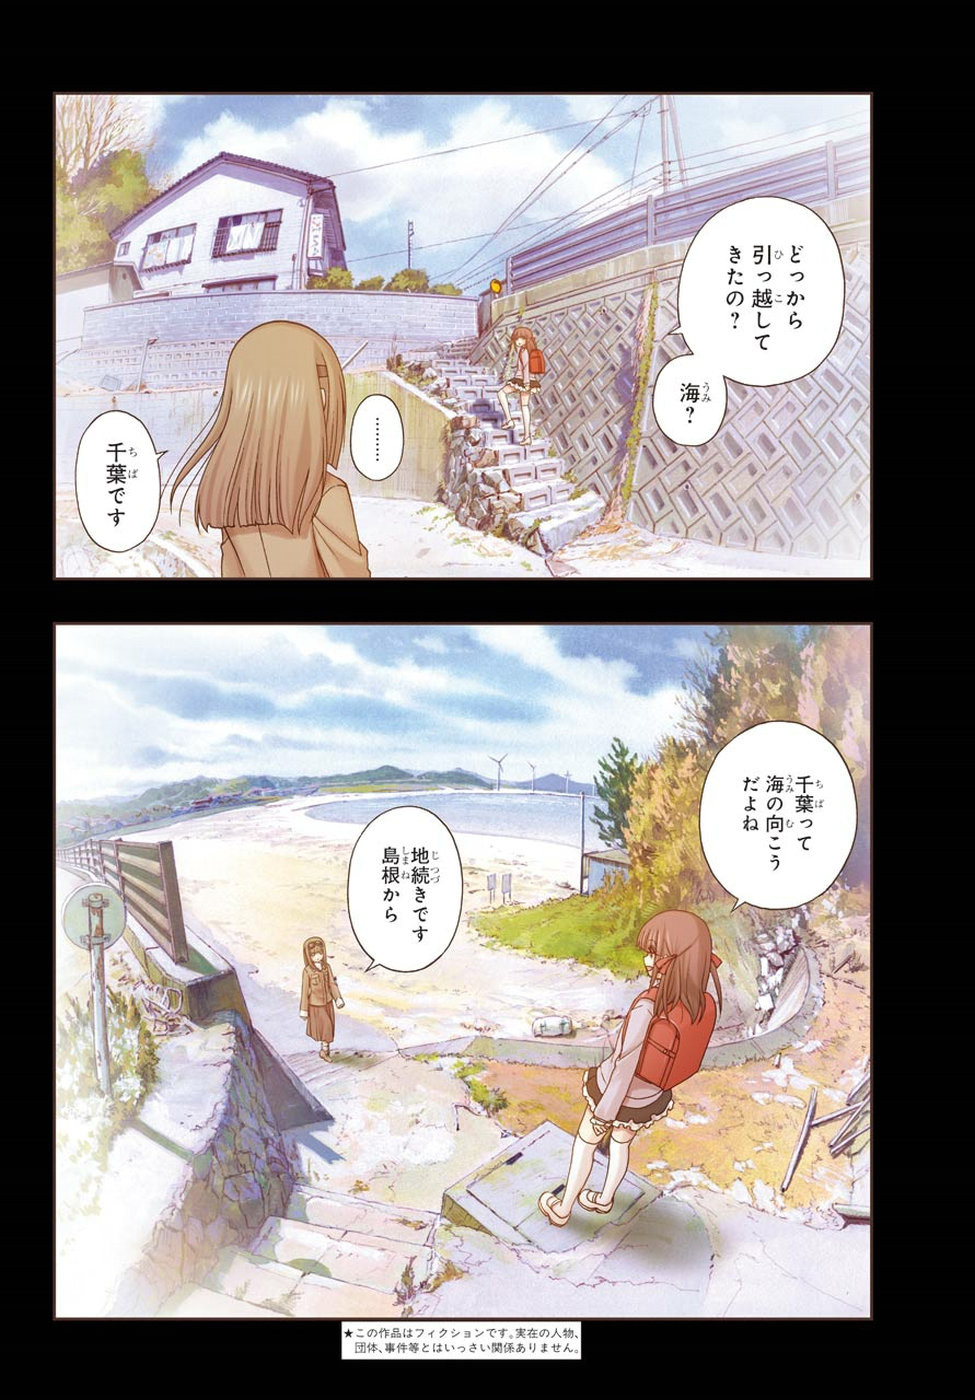 Shinohayu - The Dawn of Age Manga - Chapter 044 - Page 3